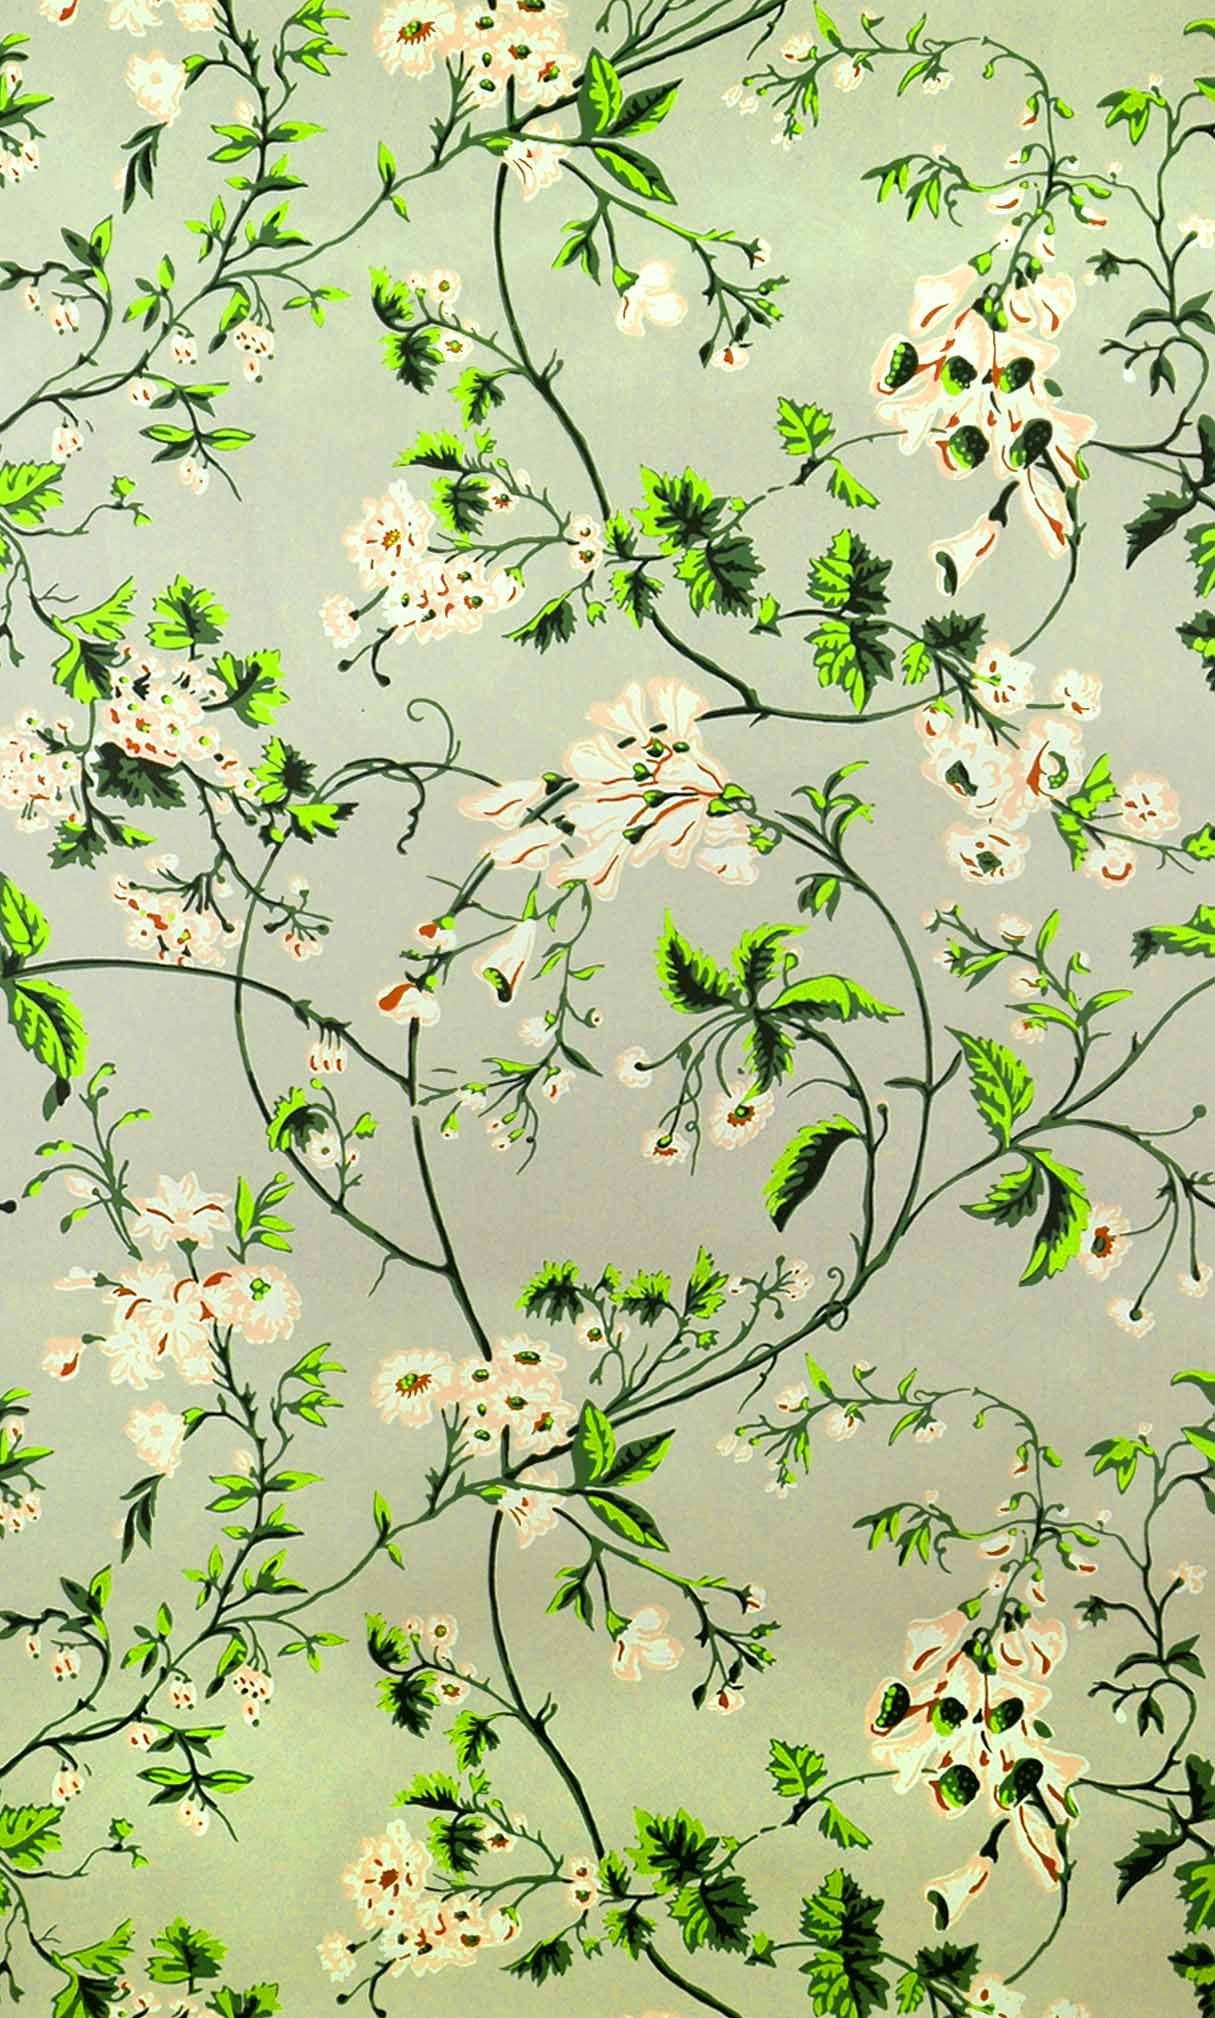 khalid name wallpaper,pflanze,blume,baum,muster,wildblume